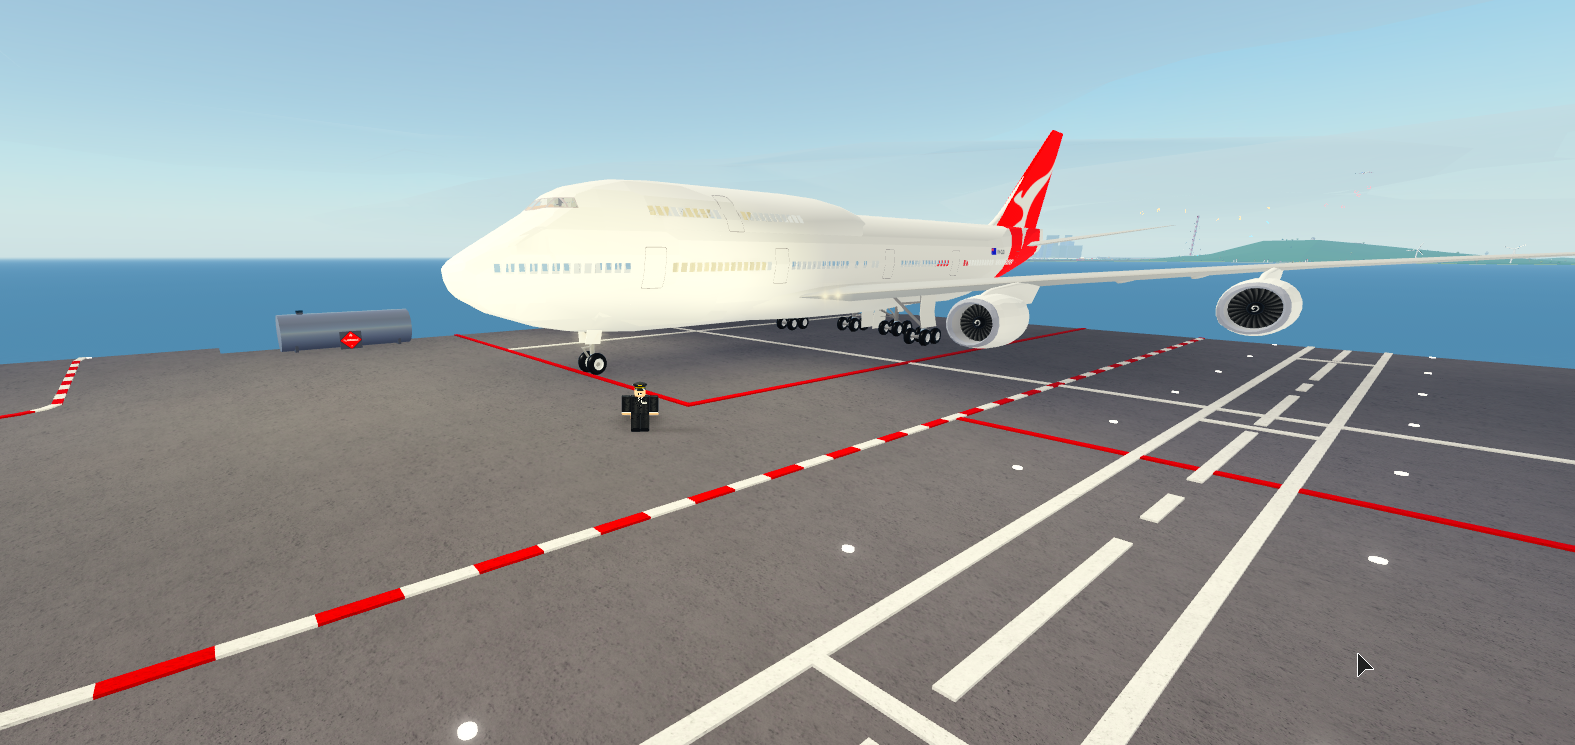 Perfect Spot For My 747 Fandom - 747 roblox